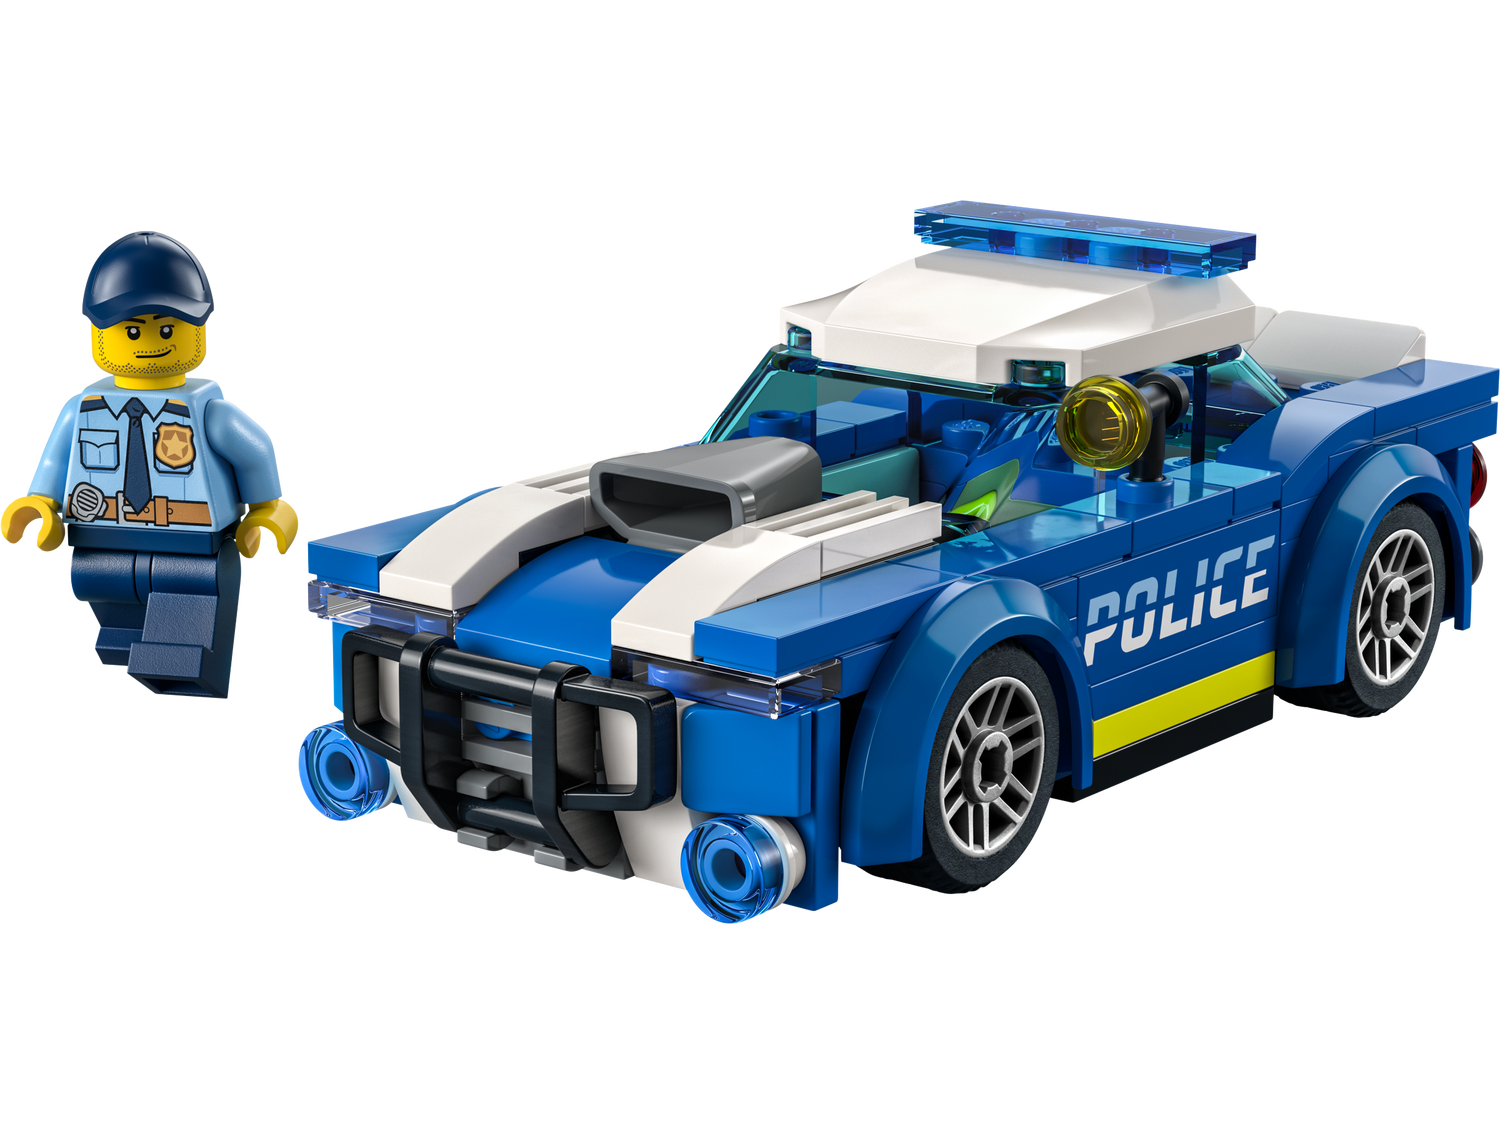 Lego City Police Car 60312 - Albagame